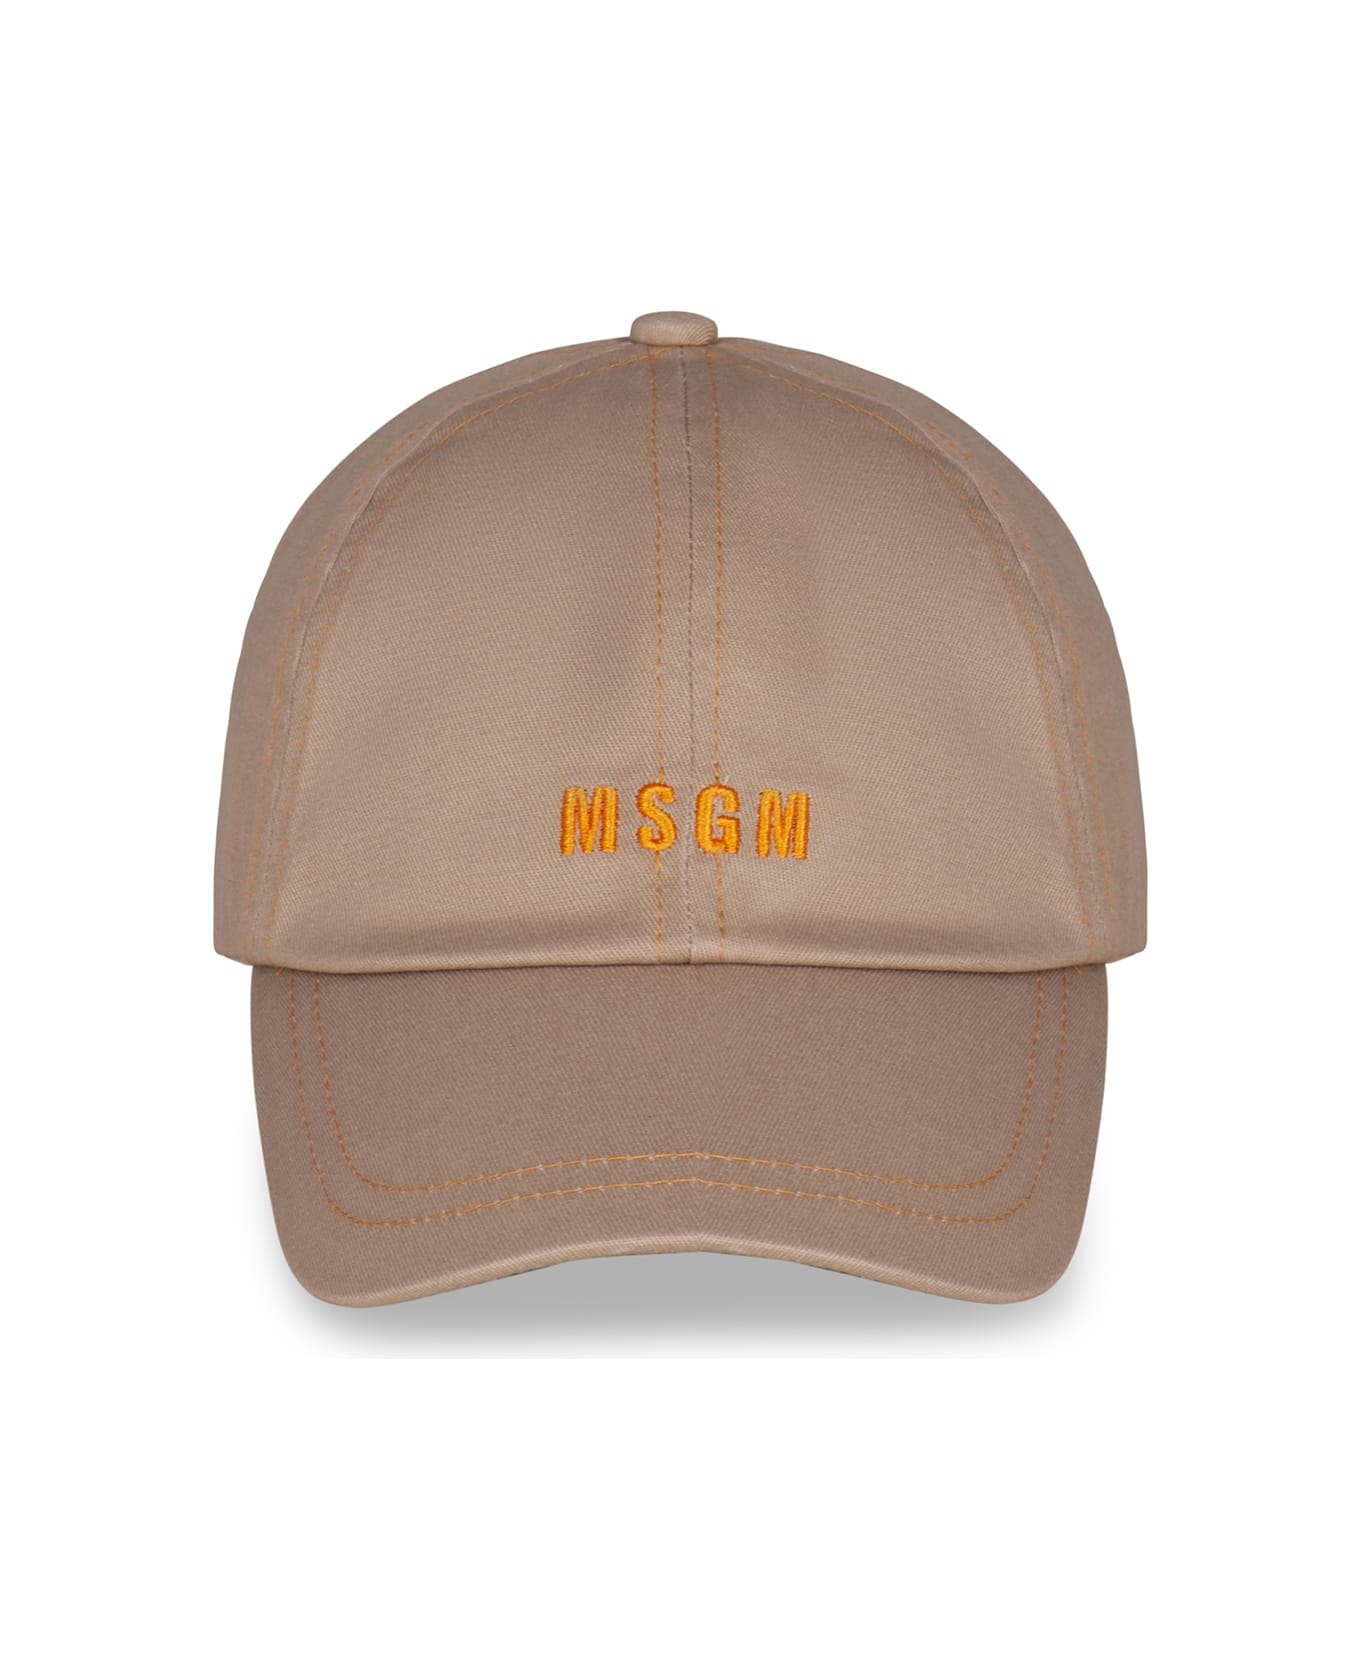 MSGM Cappello Con Visiera - Beige